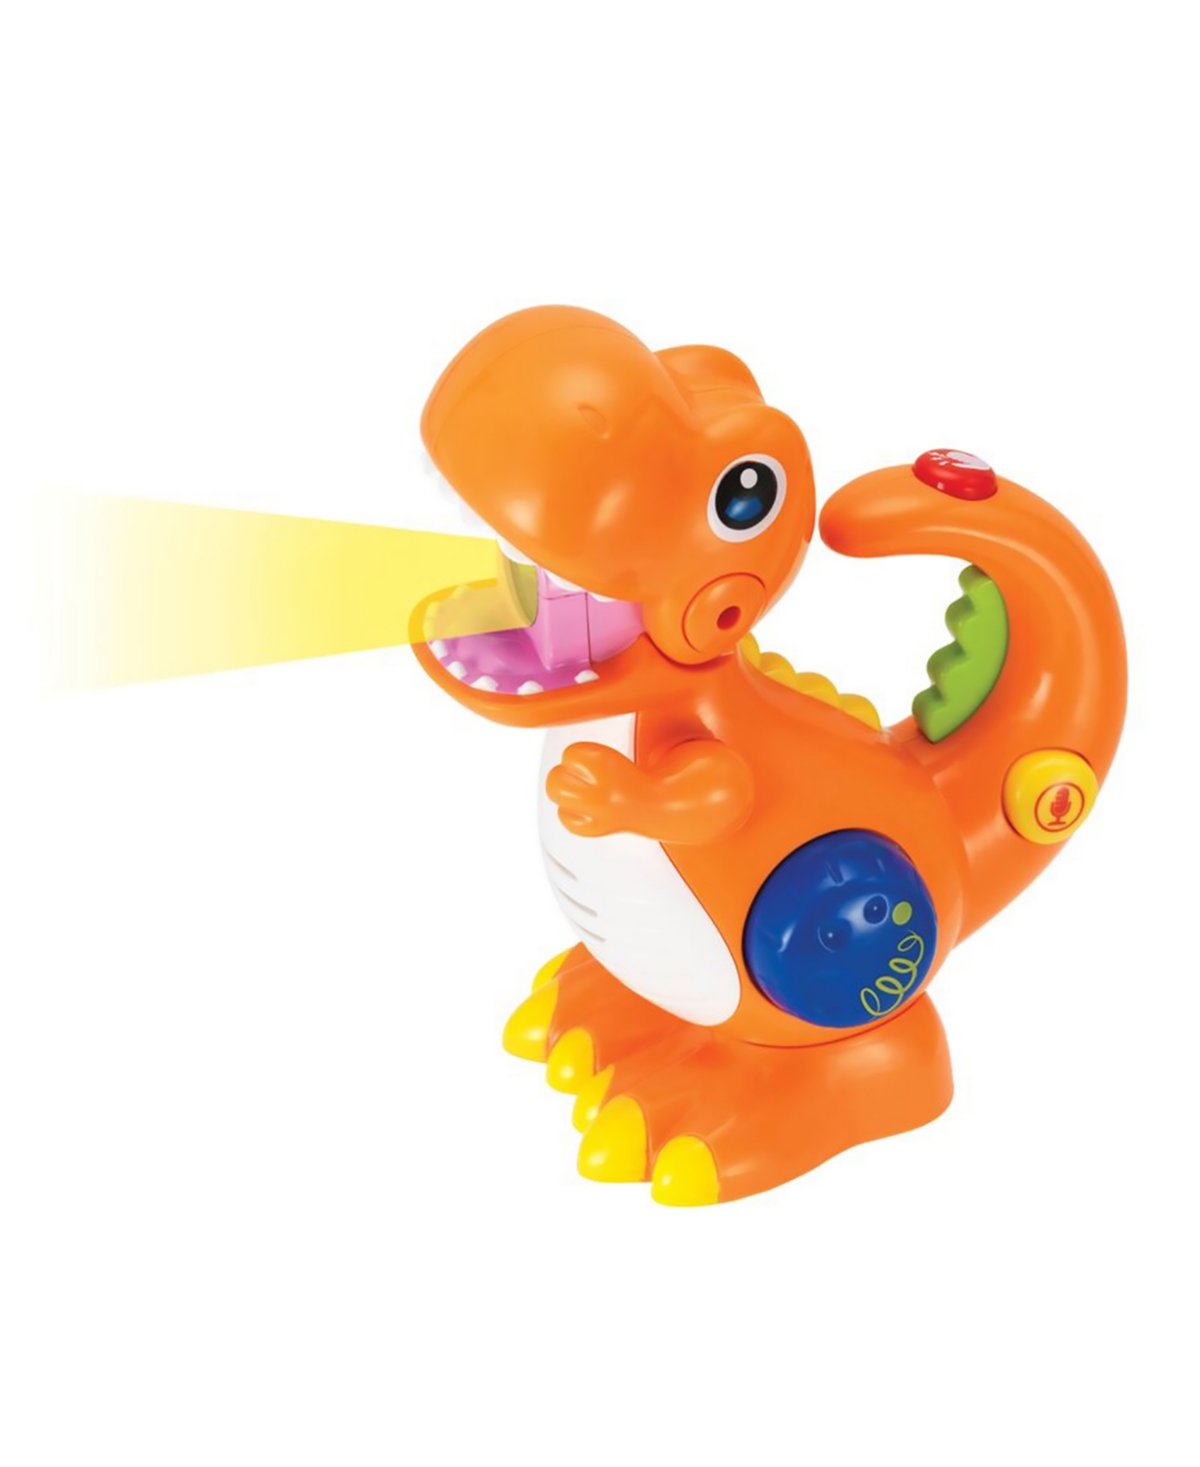 Winfun Kids' Recording And Voice Changing Dinosaur In Orange